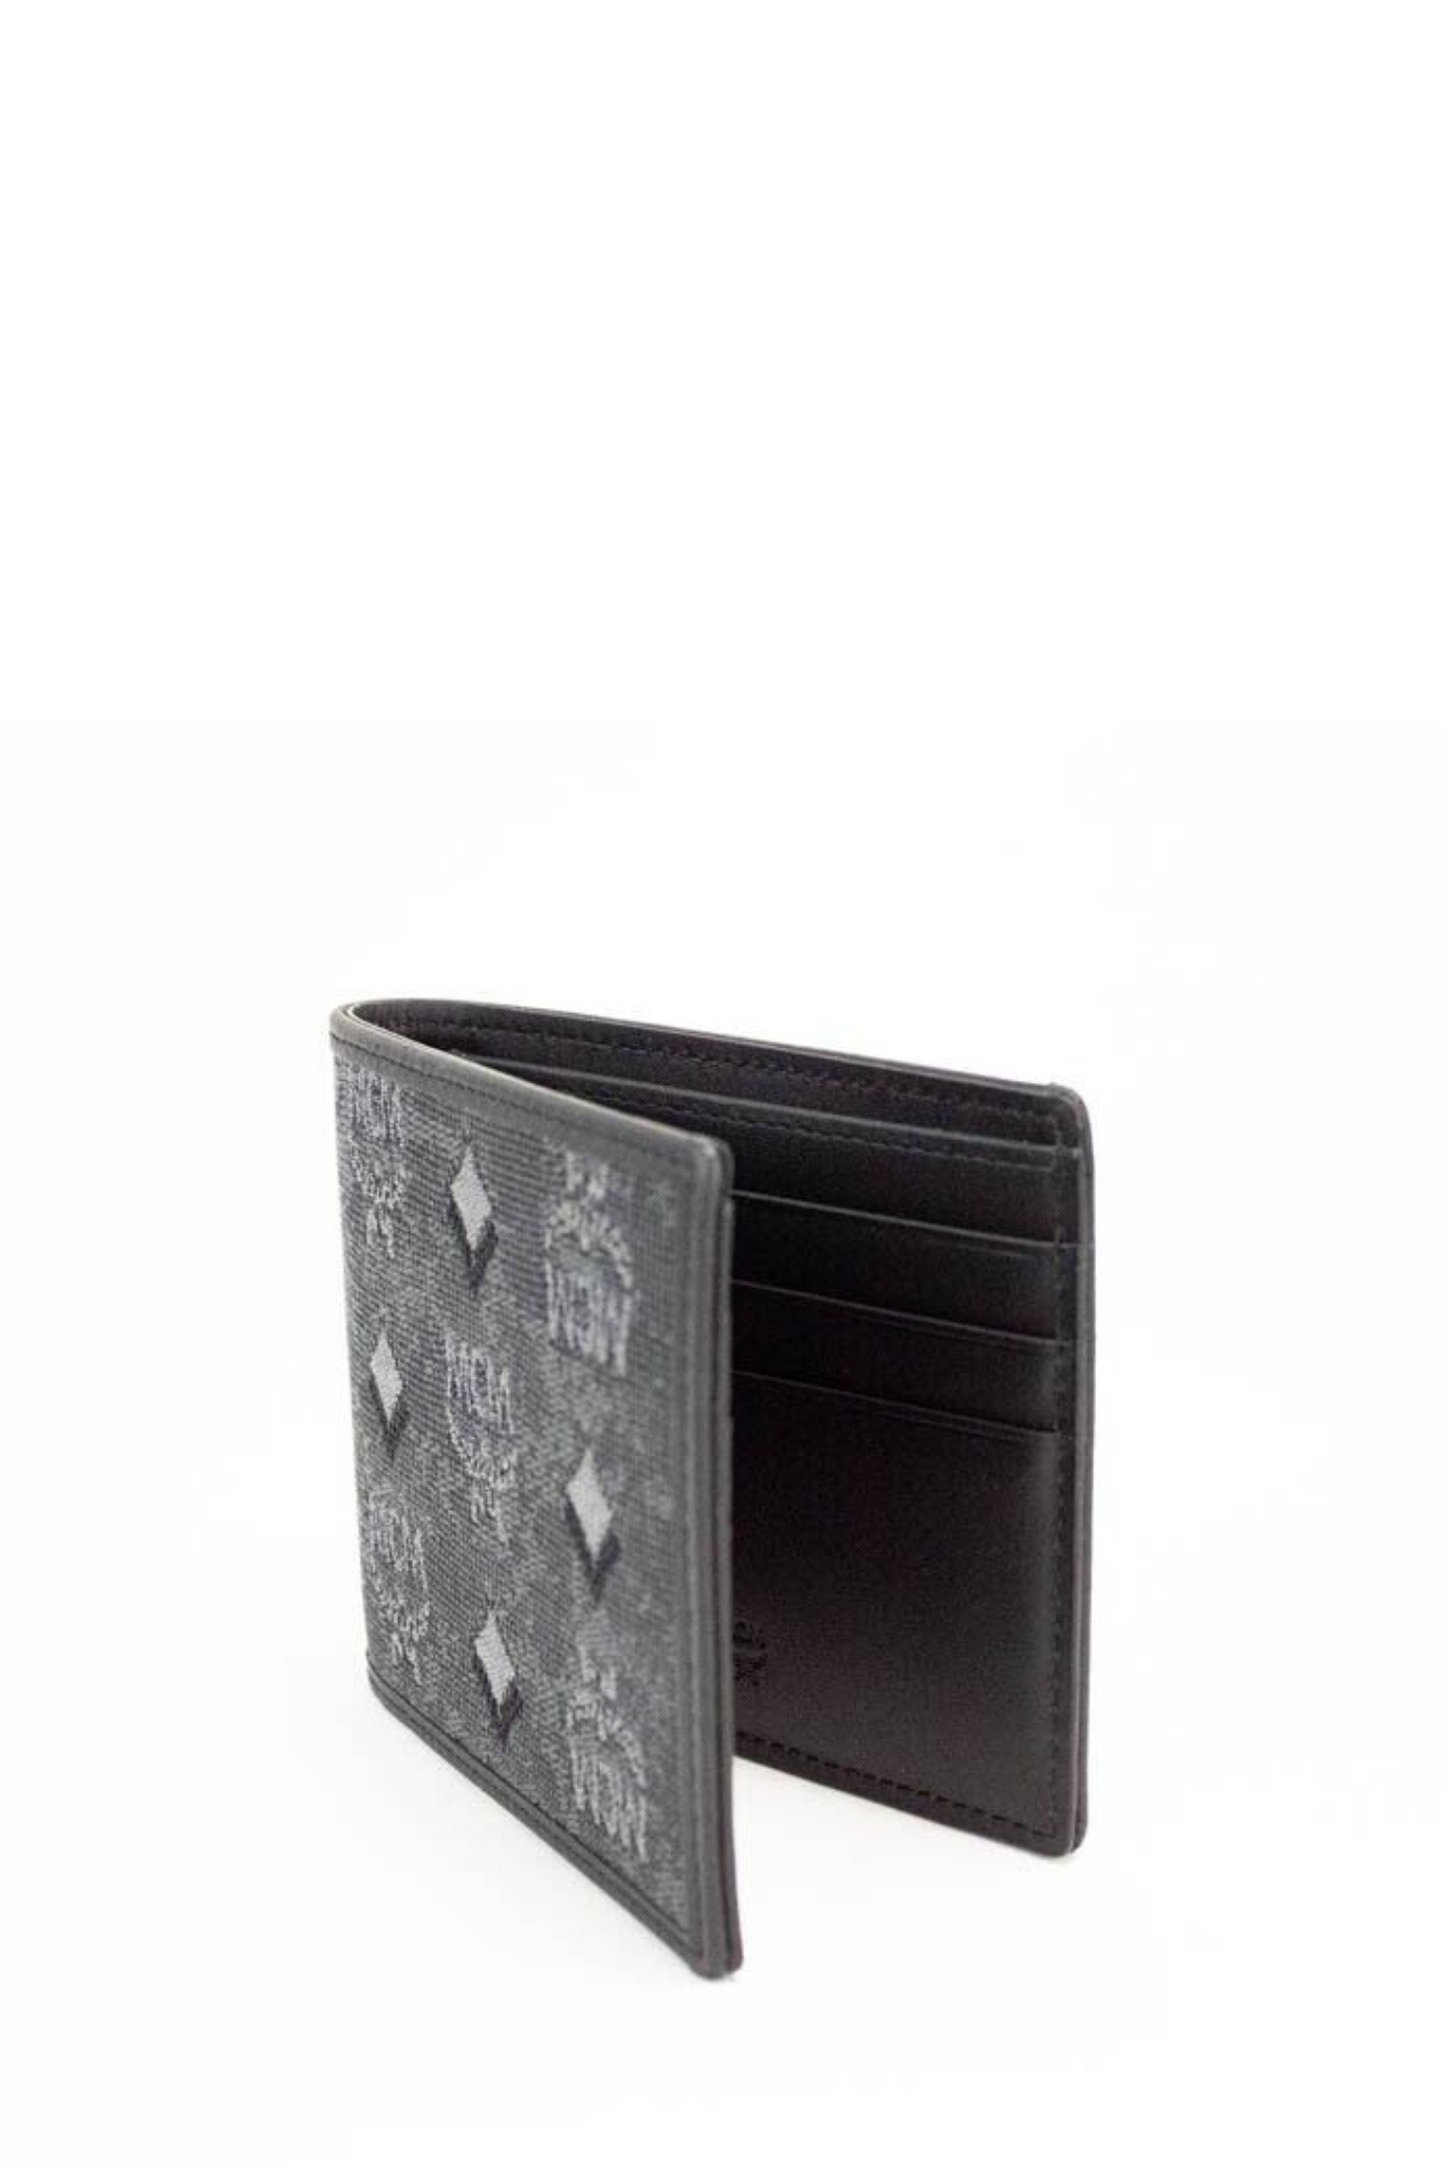 MCM Aren Bifold Wallet in Vintage Monogram Jacquard Dark Grey